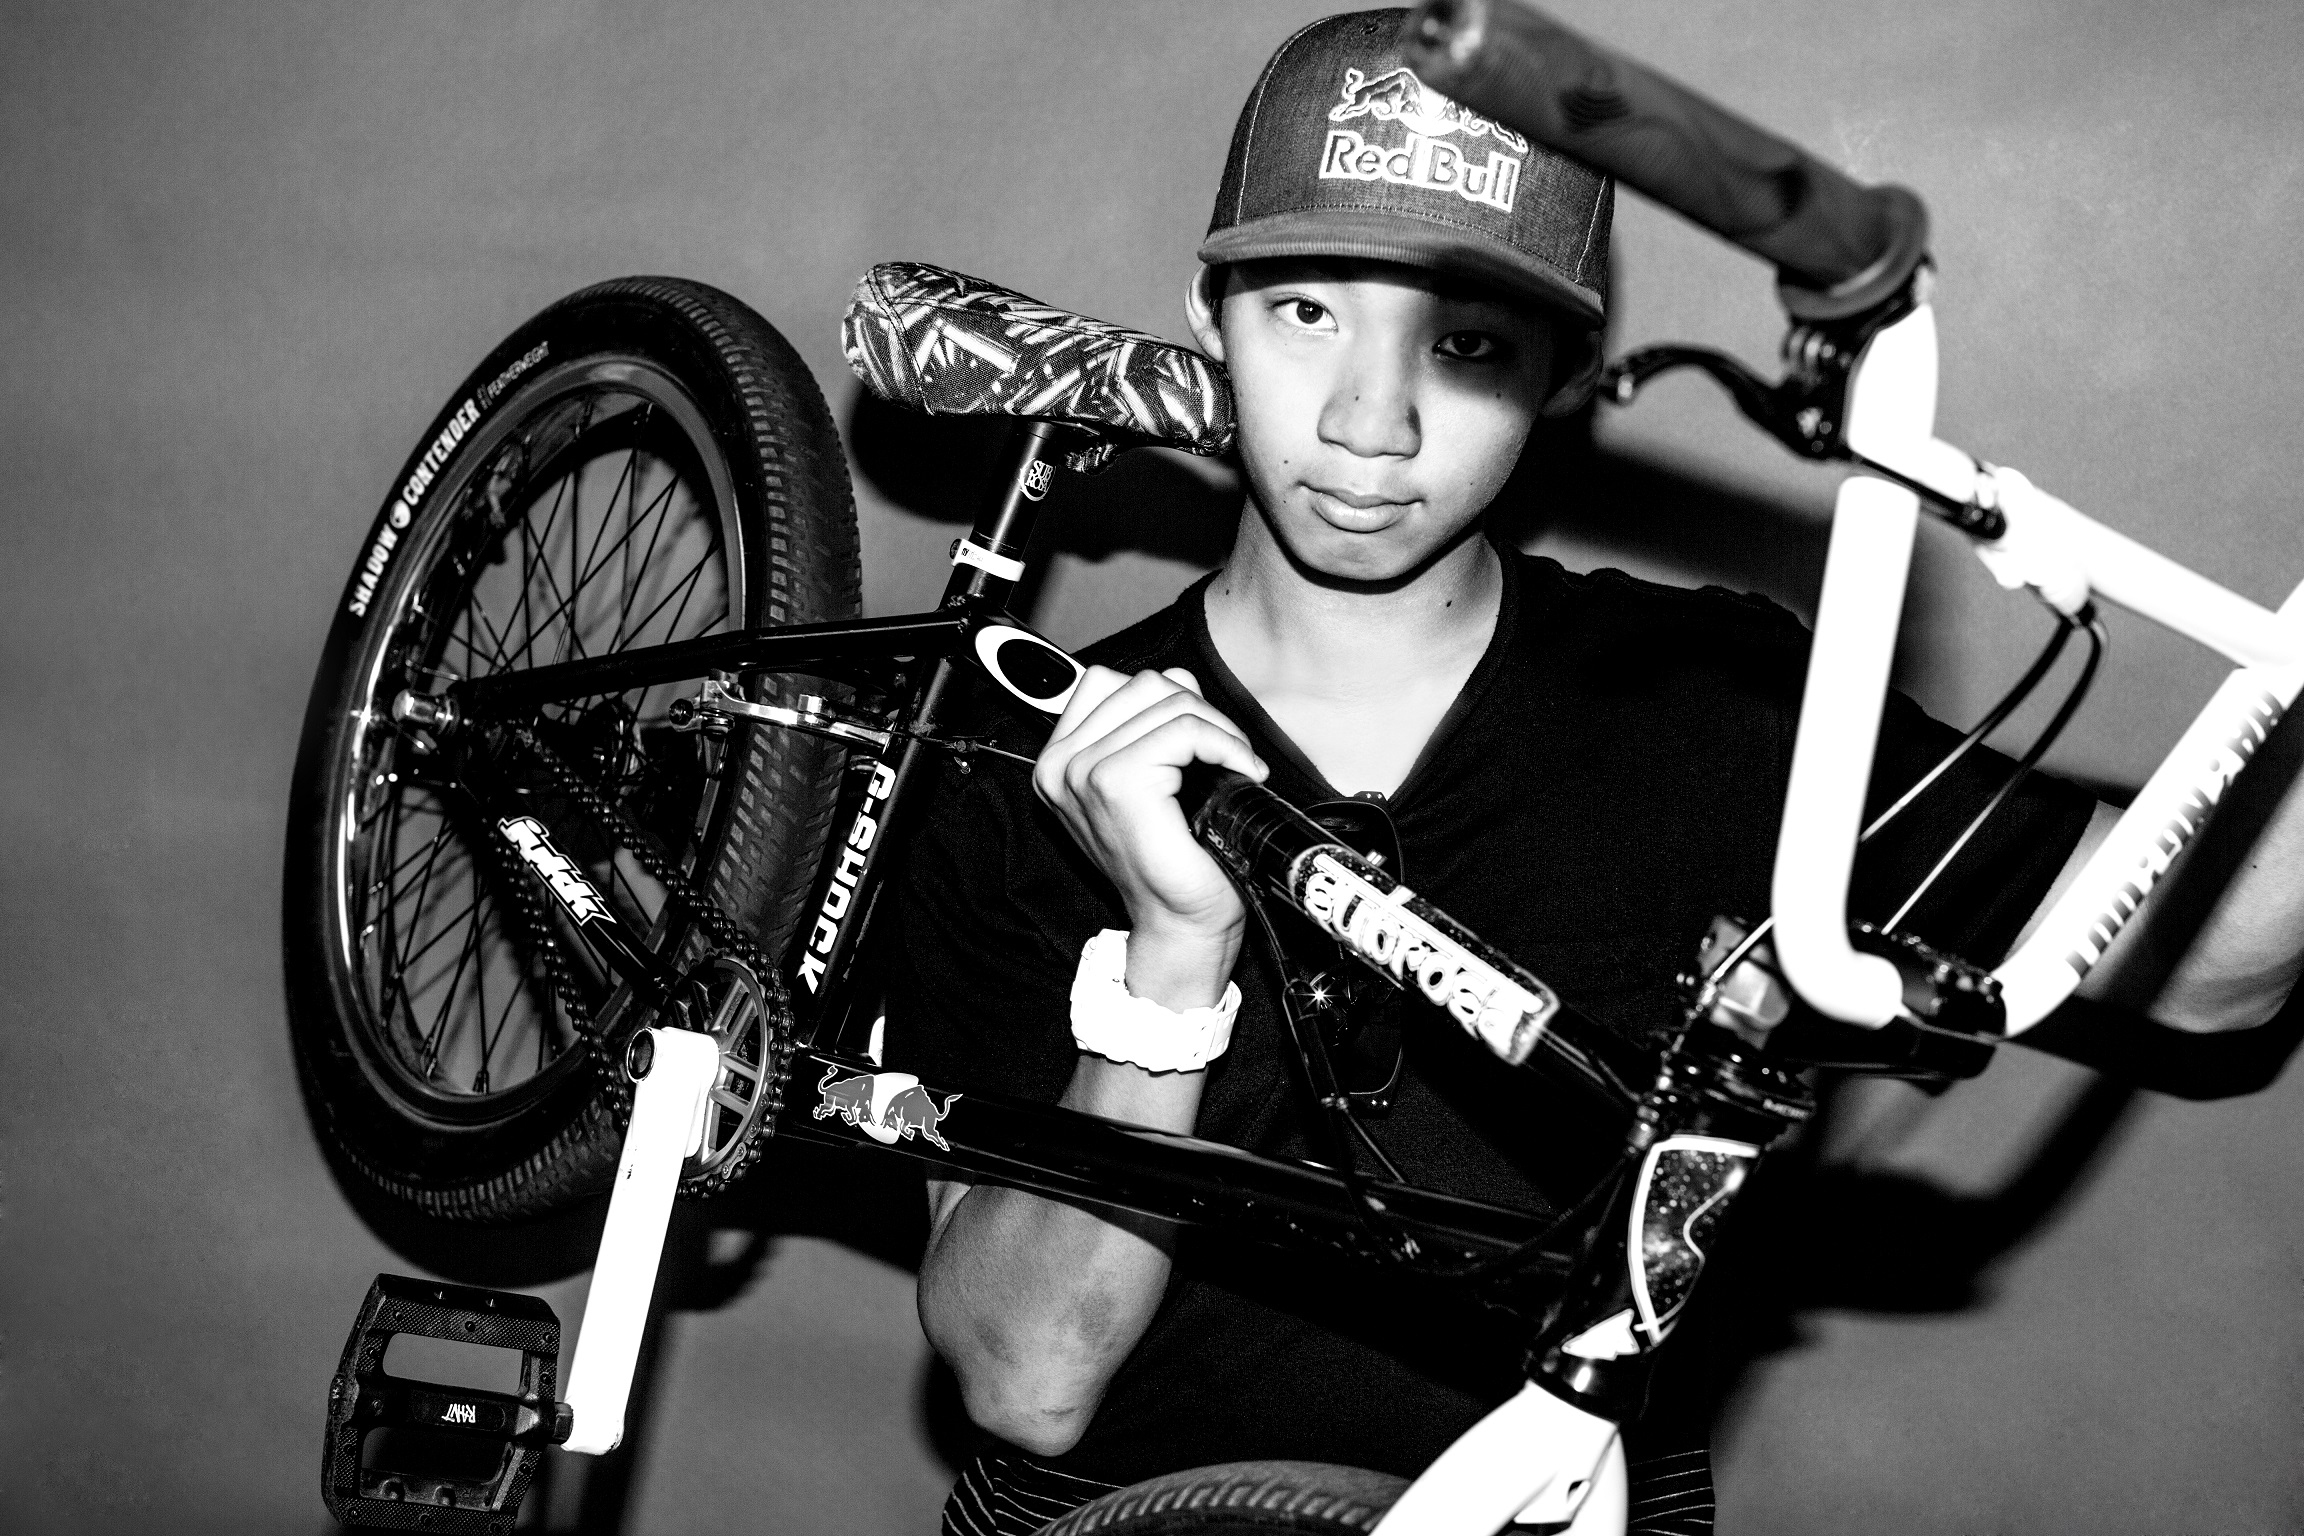 BMXフリースタイル”中村輪夢選手”とマネジメント契約締結のお知らせ